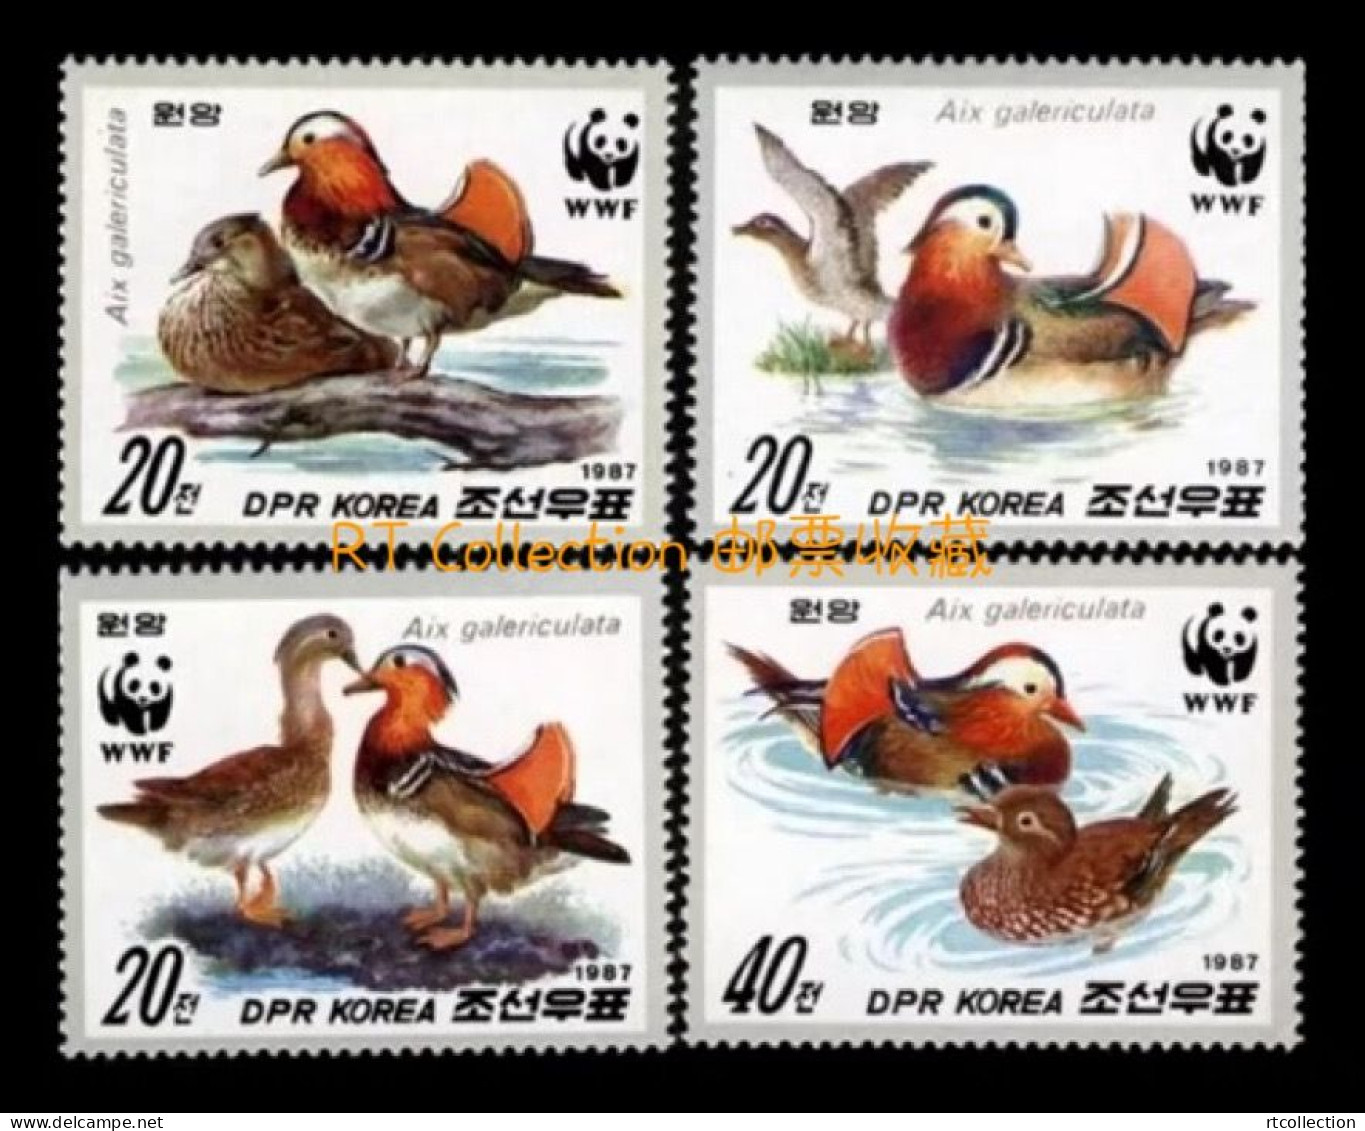 Korea 1987 World Nature Conservation Mandarin Ducks Duck WWF Fauna Animals Organizations W.W.F. Nature Stamps MNH - Canards